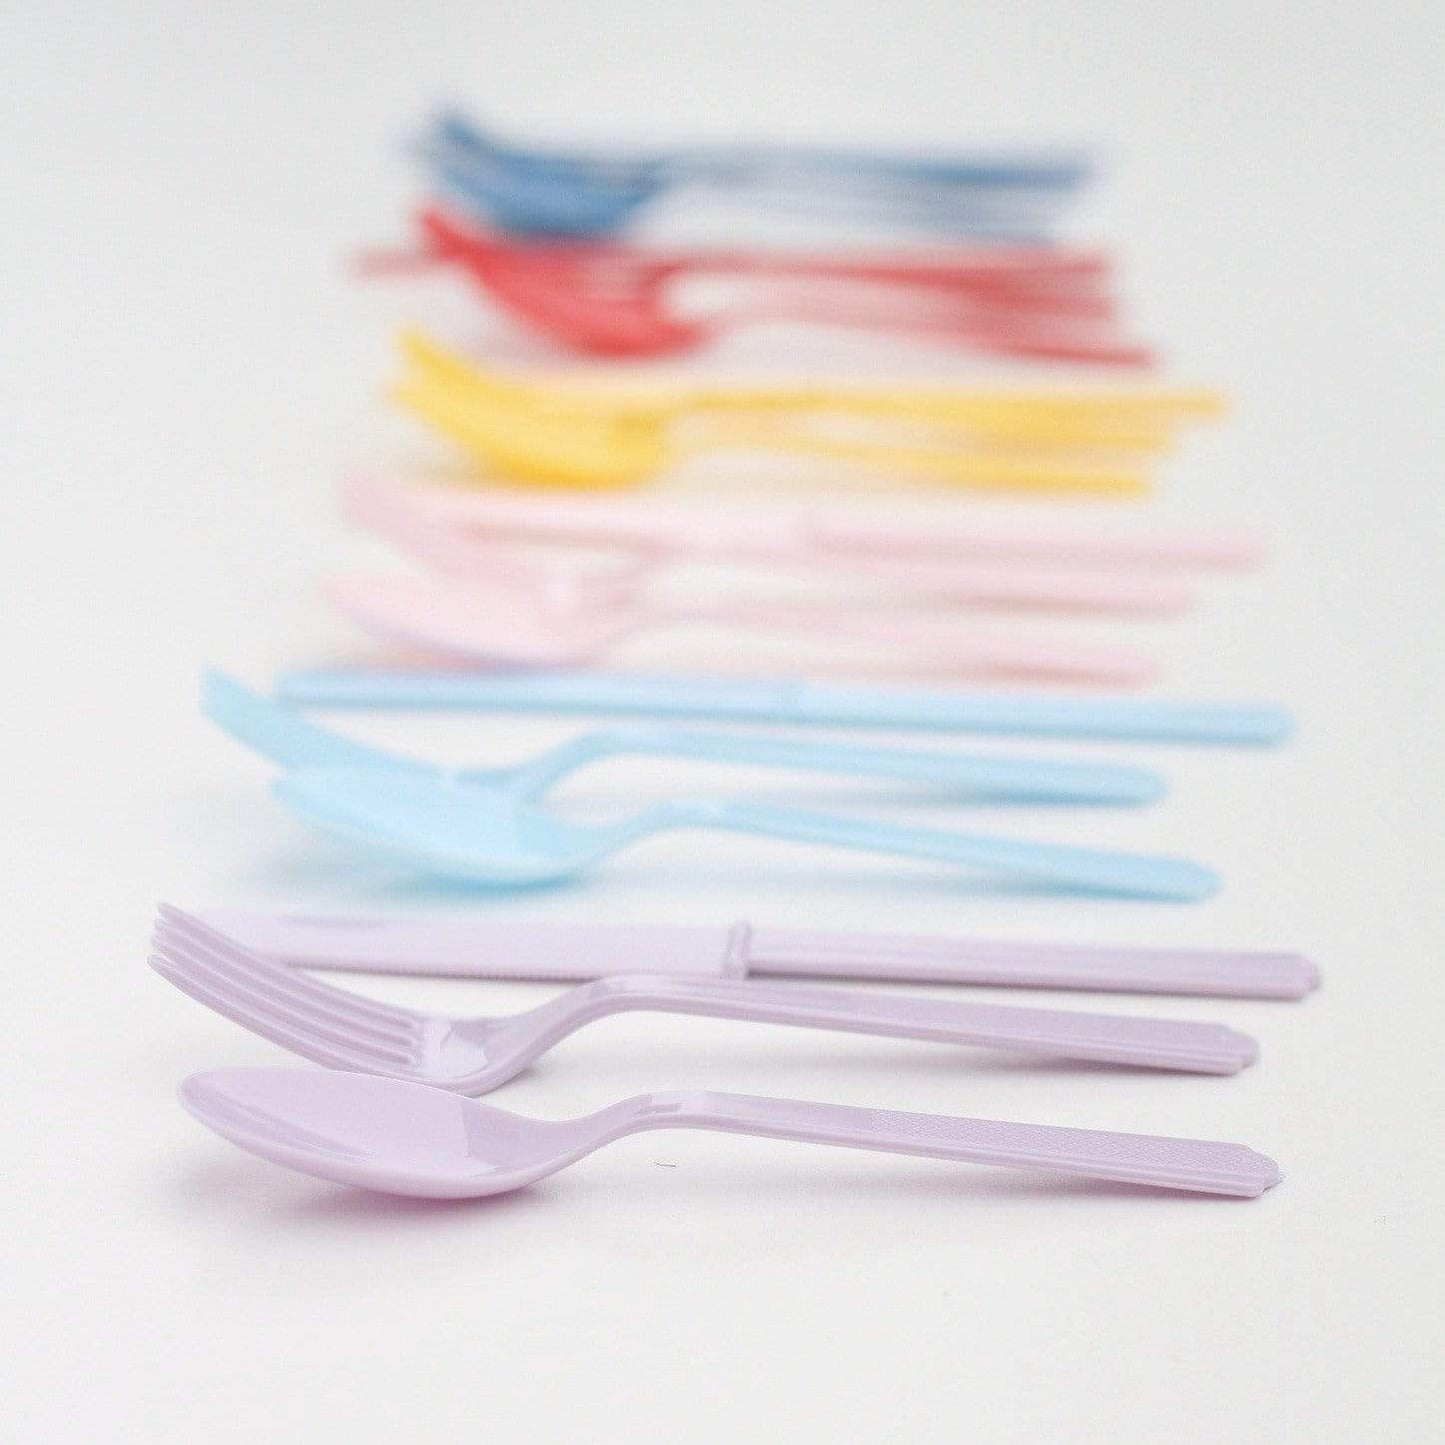 White Plastic Cutlery | Disposable Party Utensils Unique